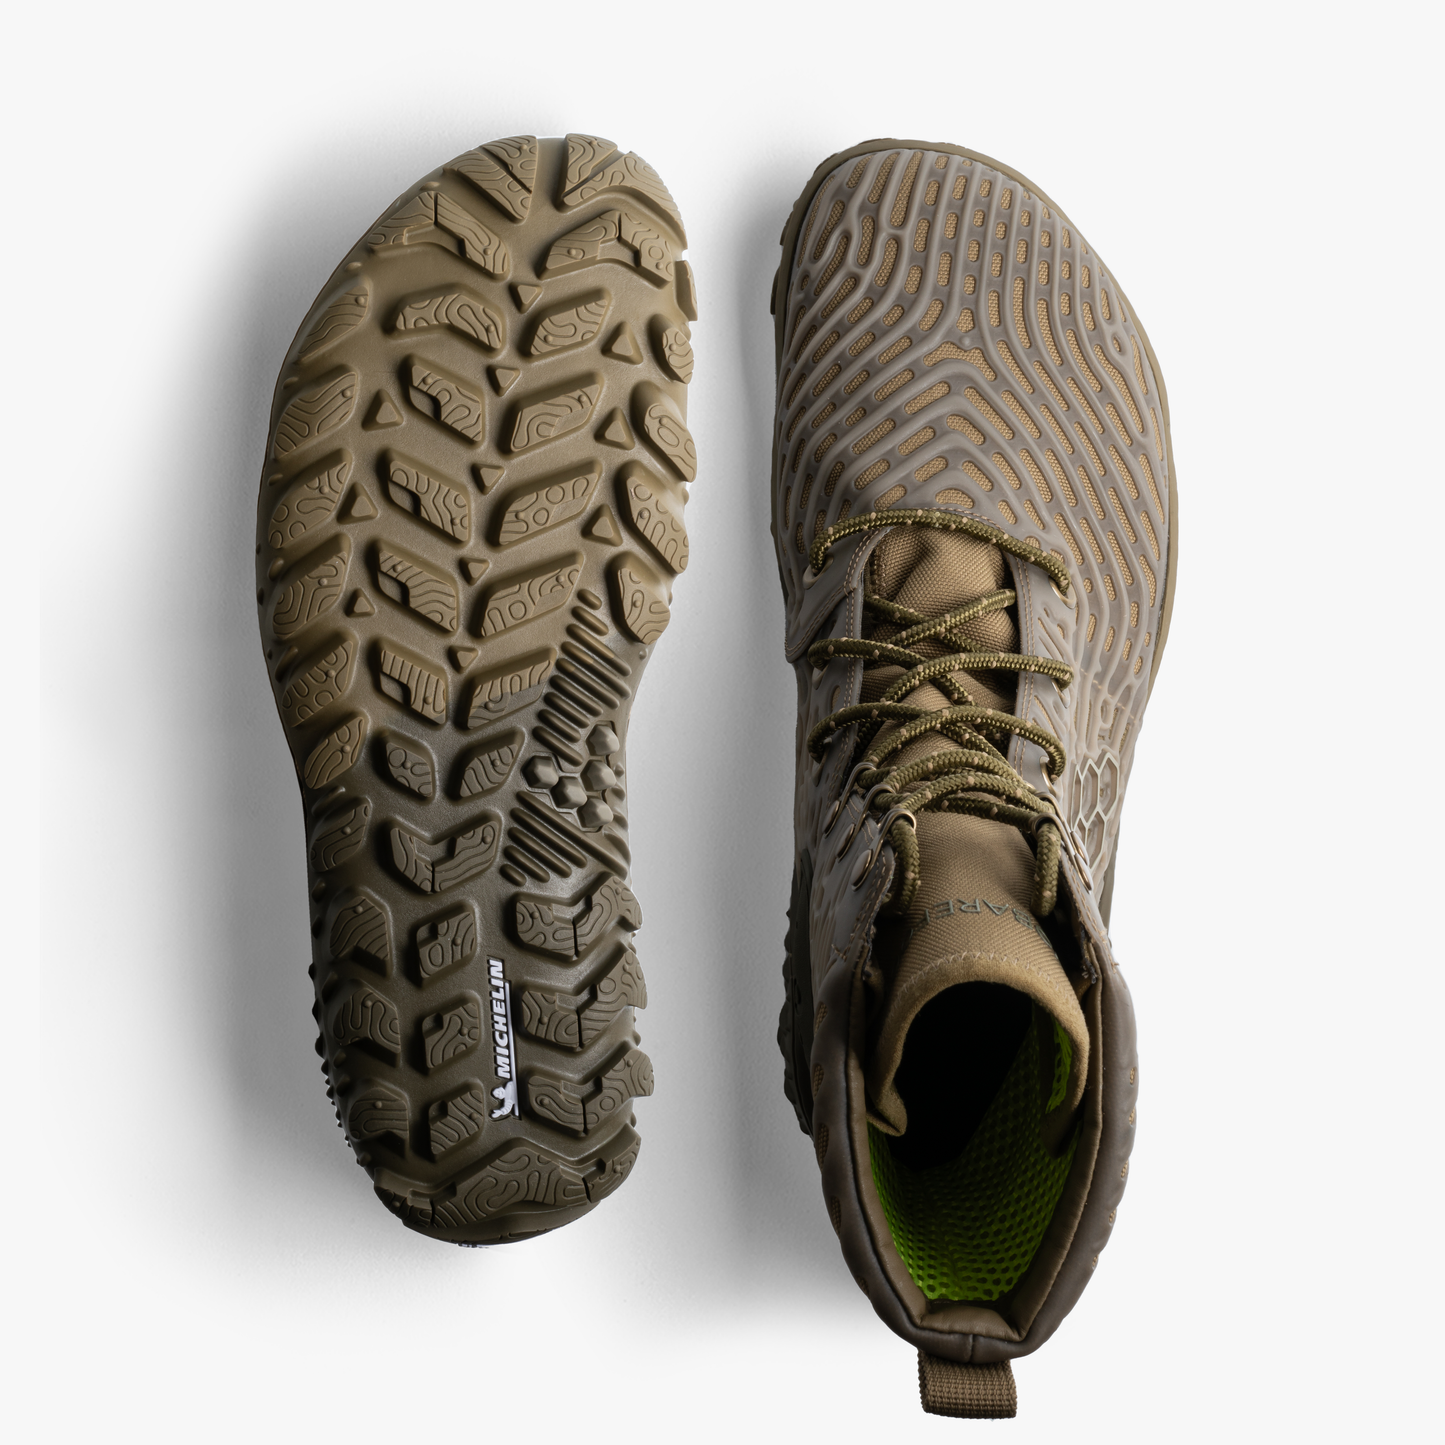 Vivobarefoot Jungle ESC Mens i varianten Invisible, vises fra oven og sålen. Skoen er i armygrøn og designet til at efterligne barfodsgang.